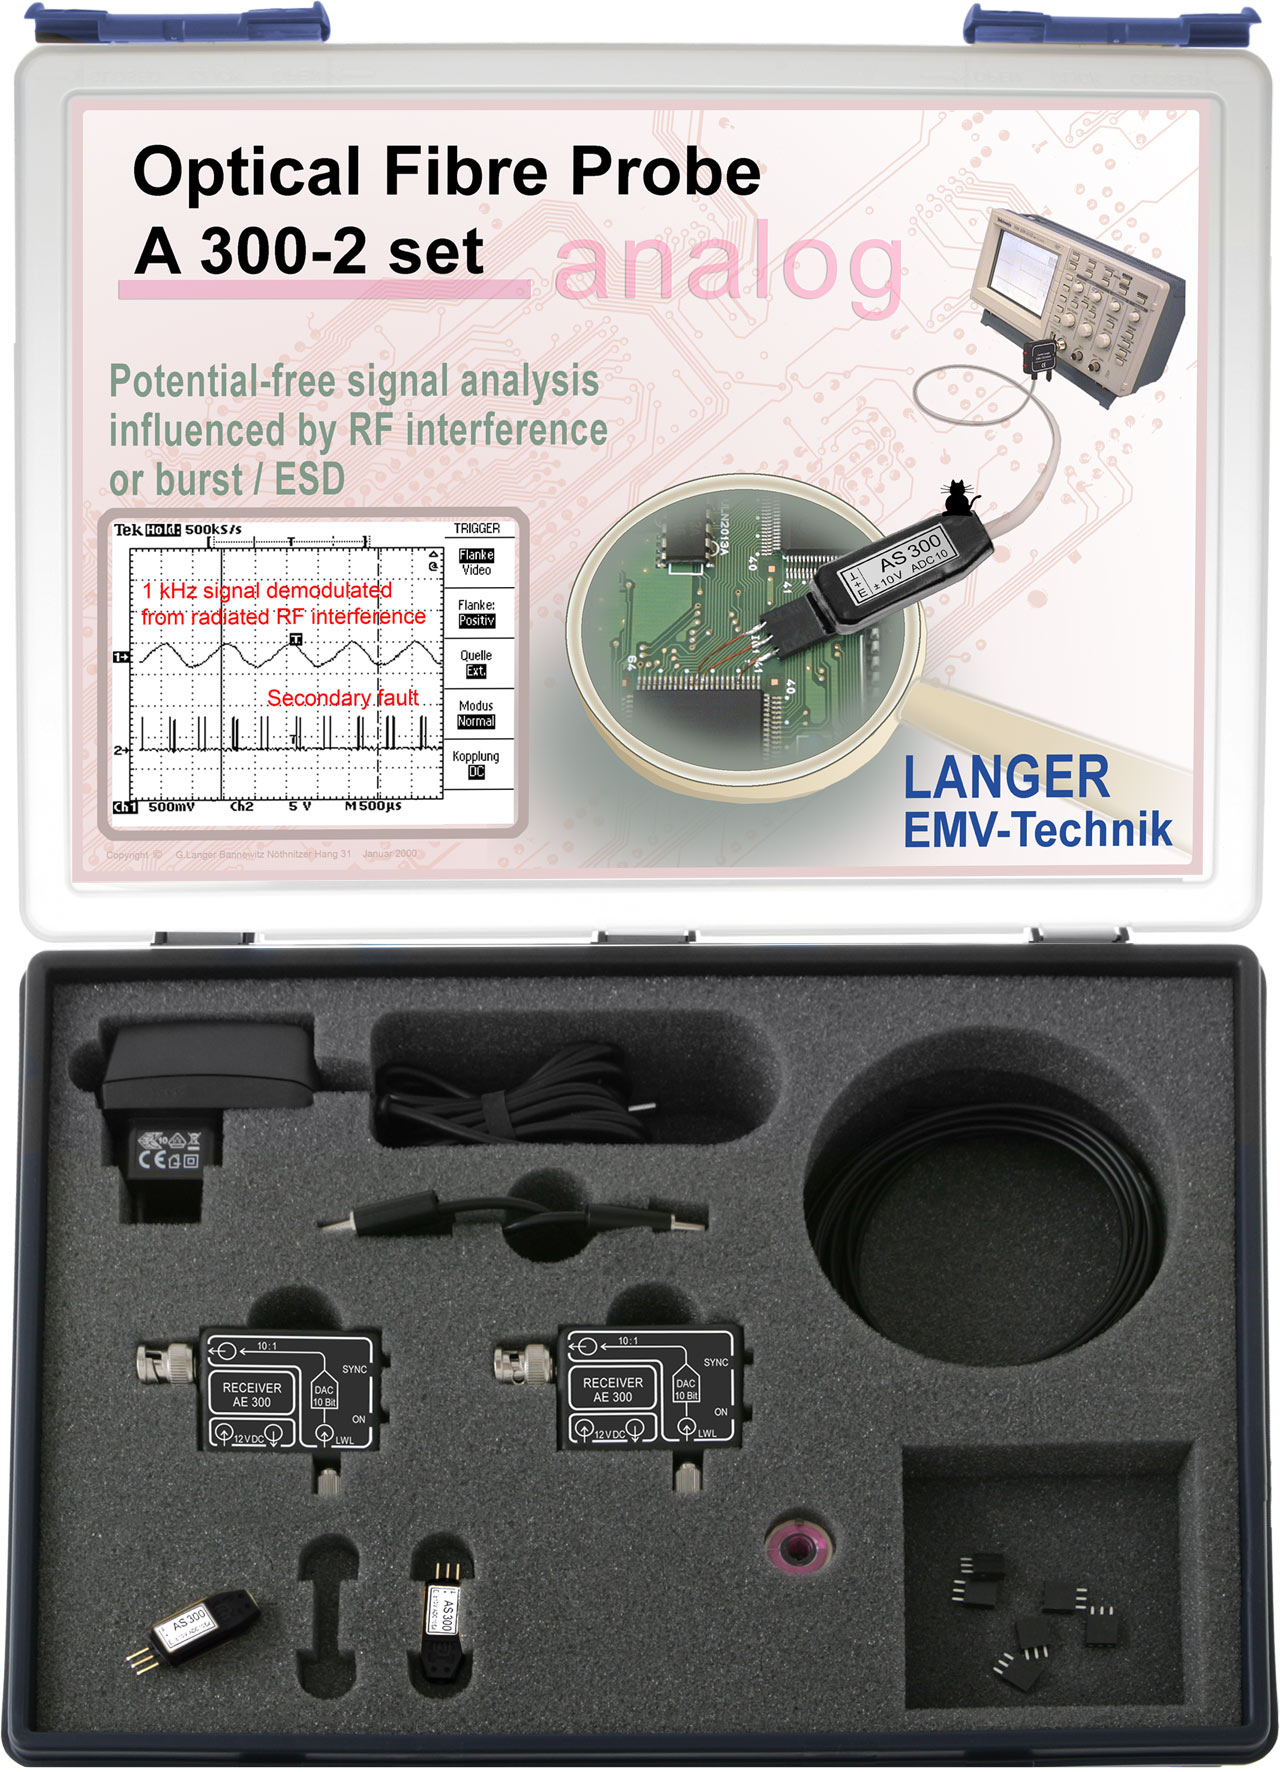 A300-2 set, Optical Fiber Probe 2-Channel, 5 MHz